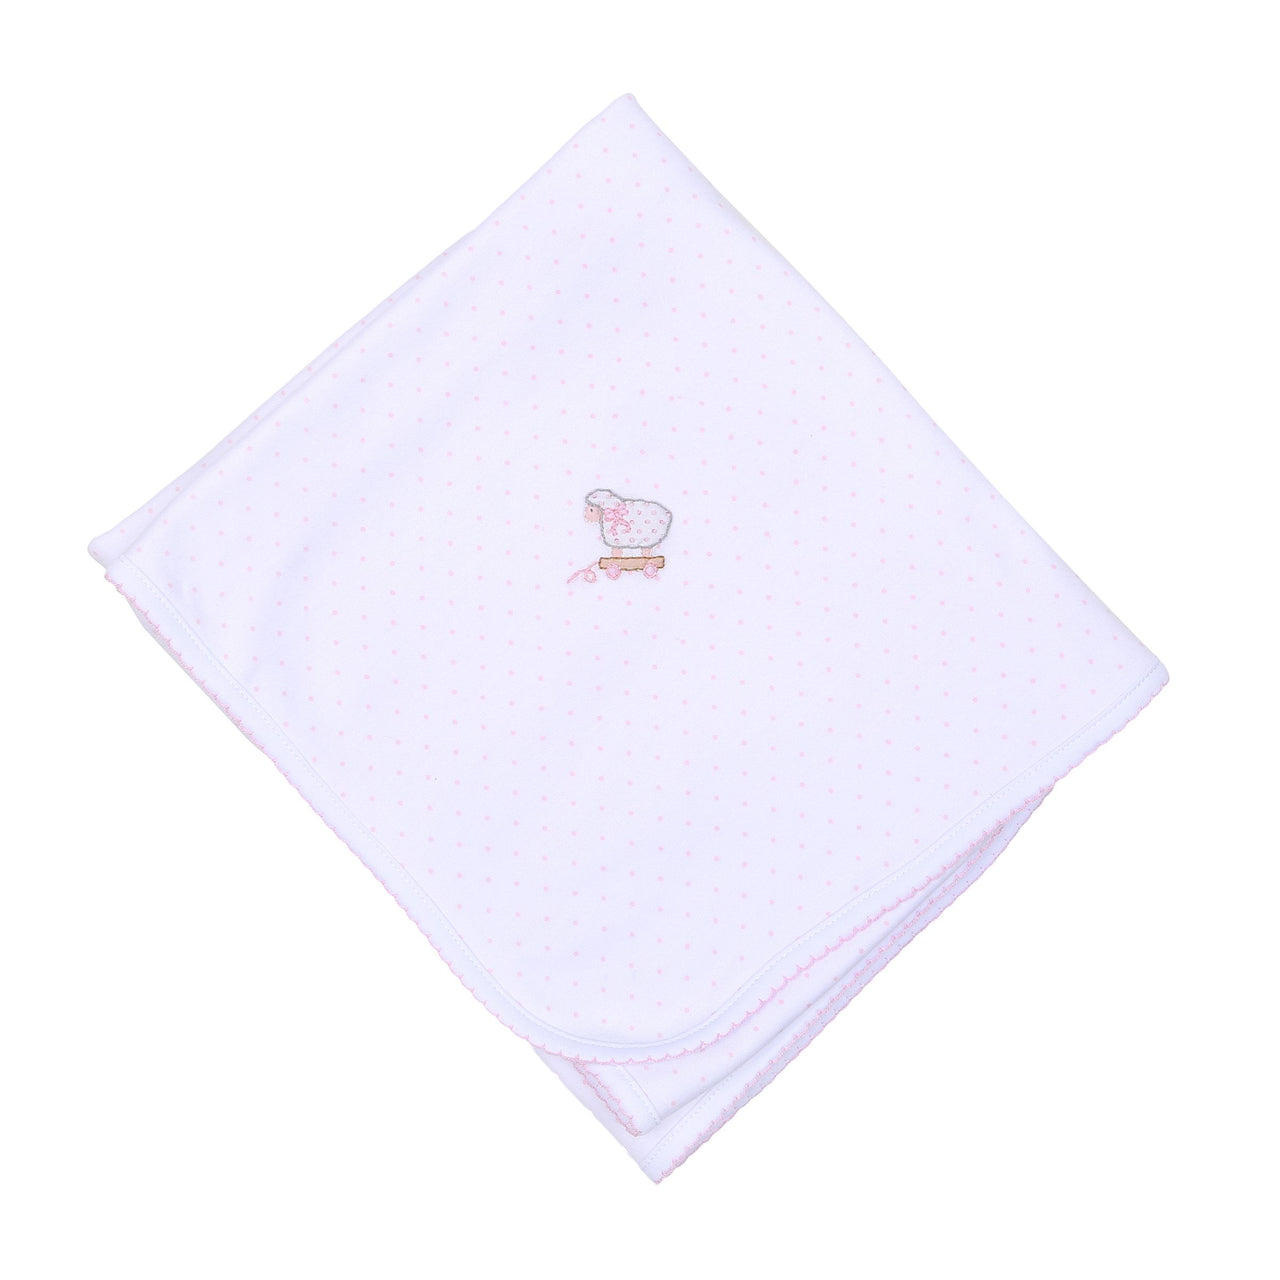 Magnolia Baby Darling Lambs Emb Receiving Blanket 5274-52 5010